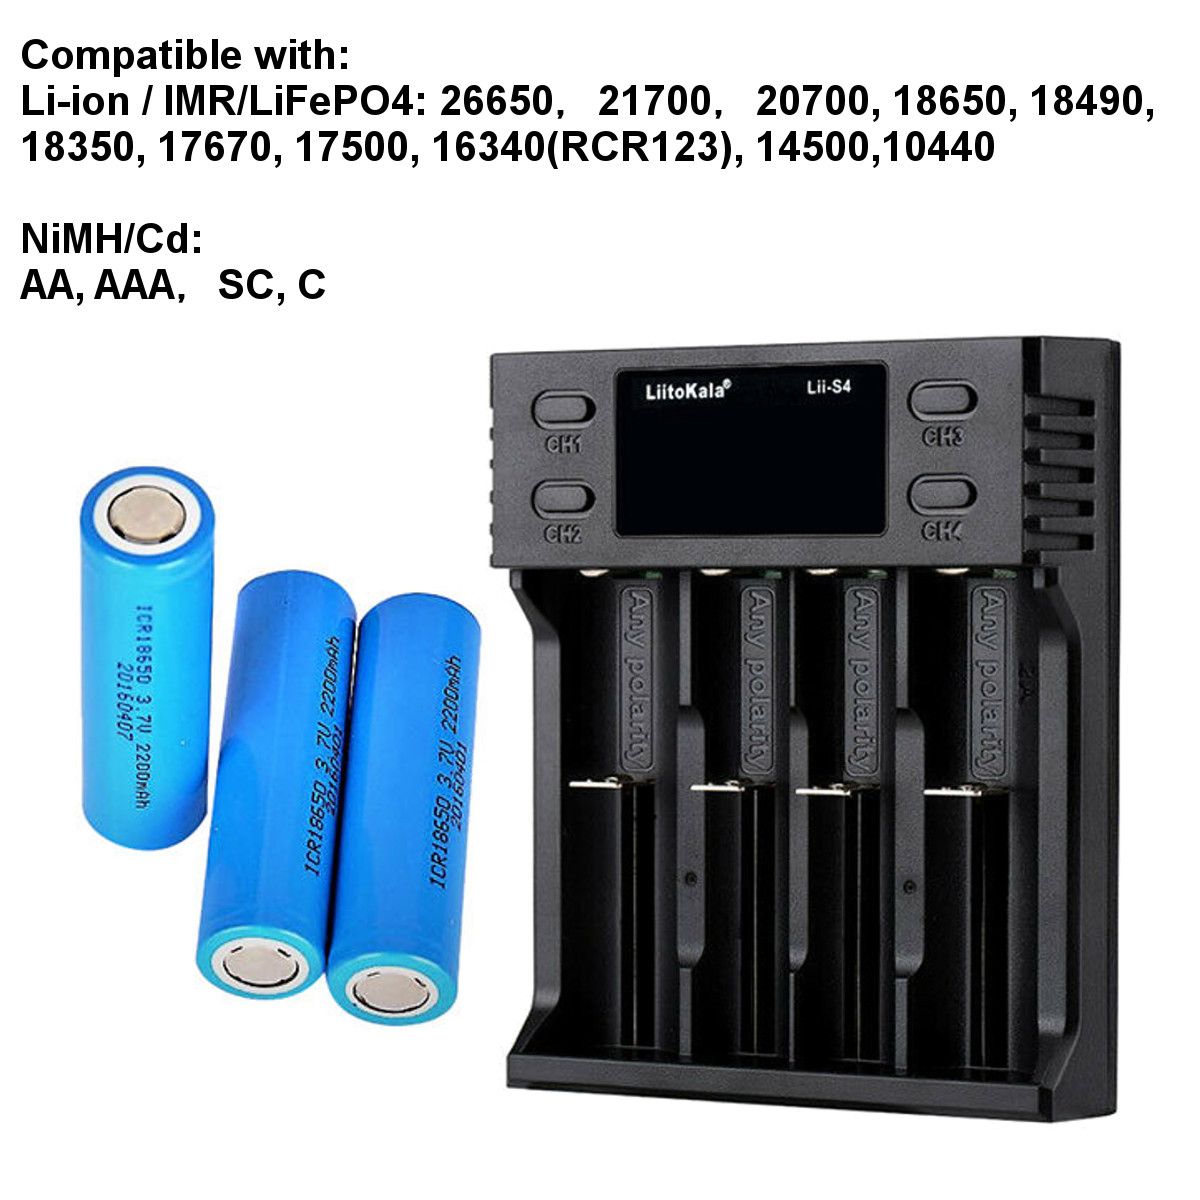 LiitoKala-LII-S4-LCD-Smart-Battery-Charger-4-Slot-Charger-for-18650-26650-18350-NiMH-AA-1634408